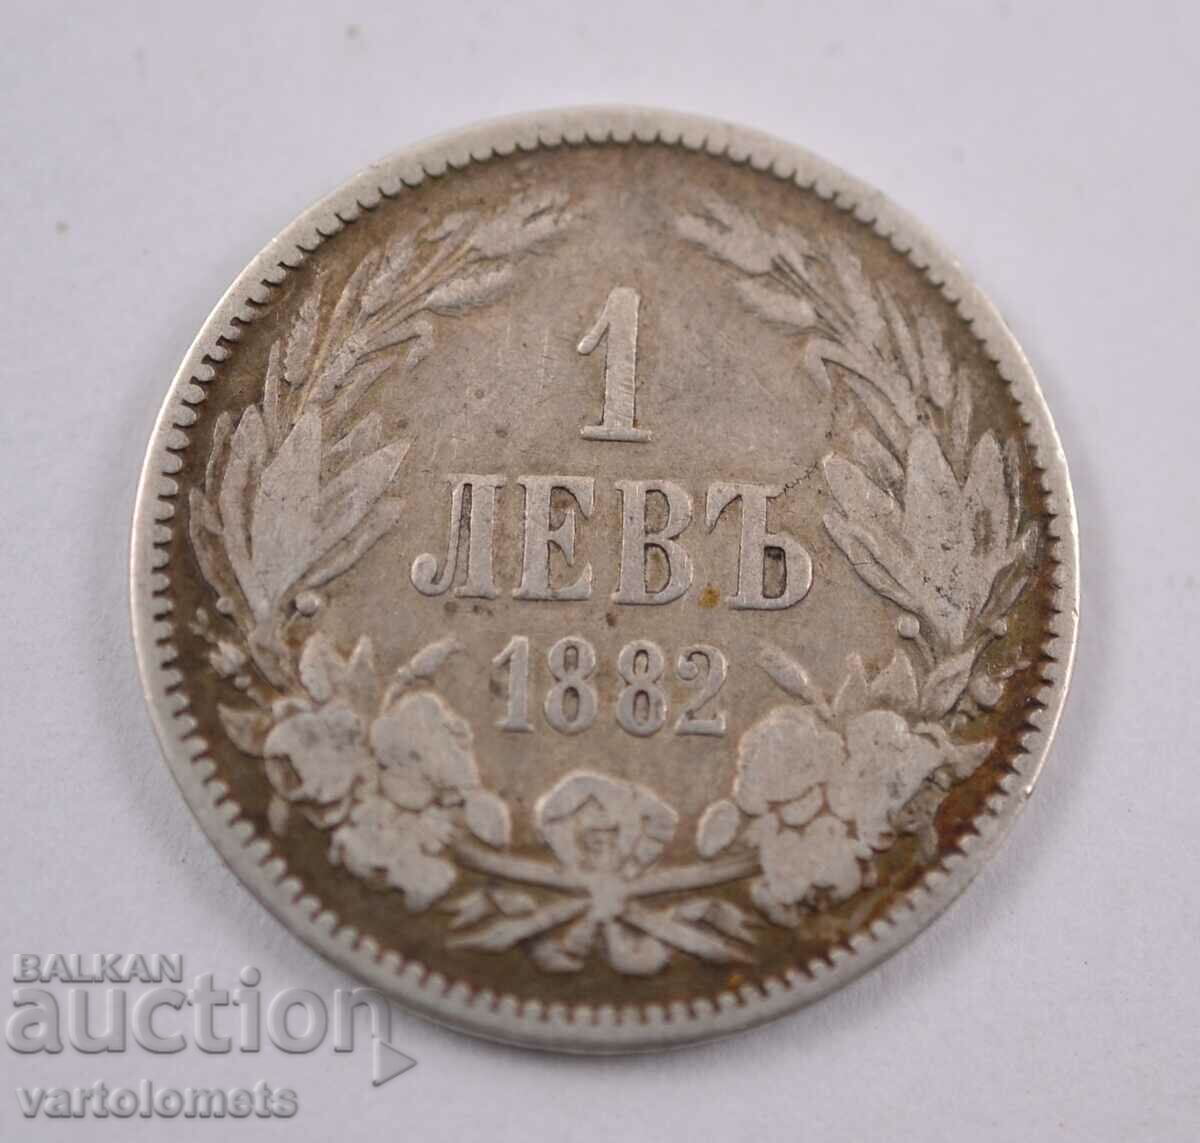 1 lev 1882 - Βουλγαρία